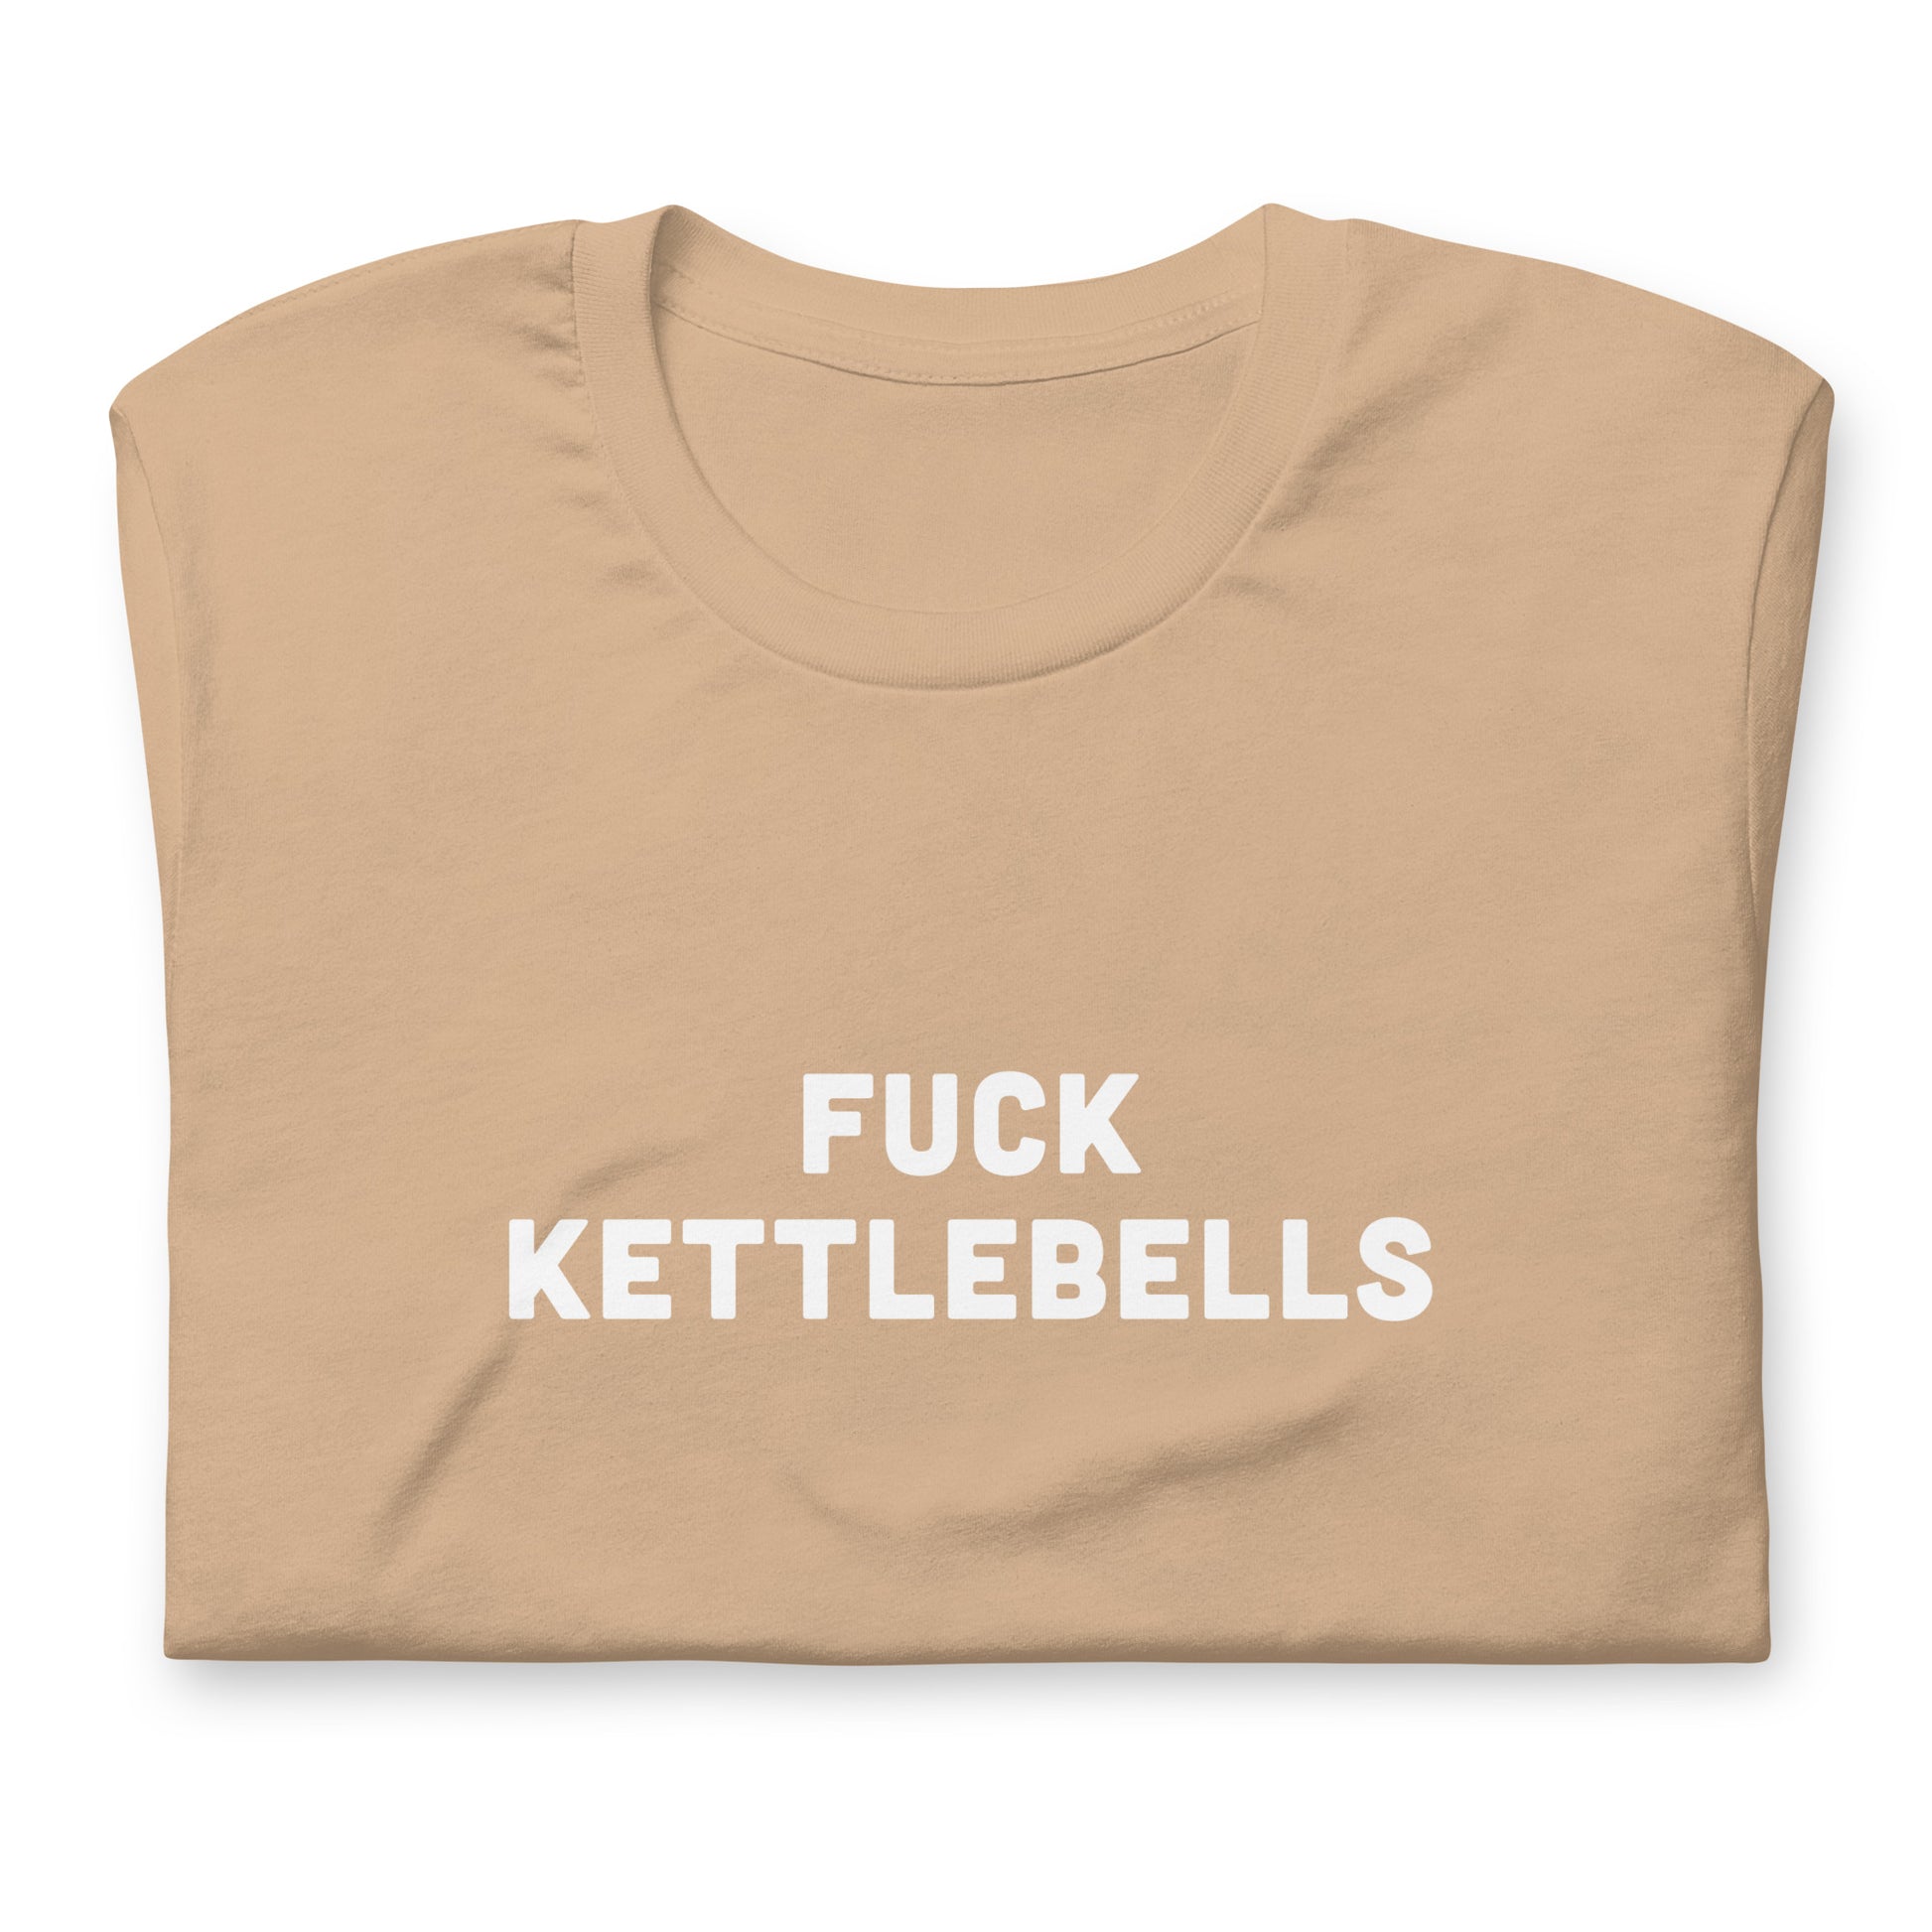 Fuck Kettlebells T-Shirt Size XL Color Forest